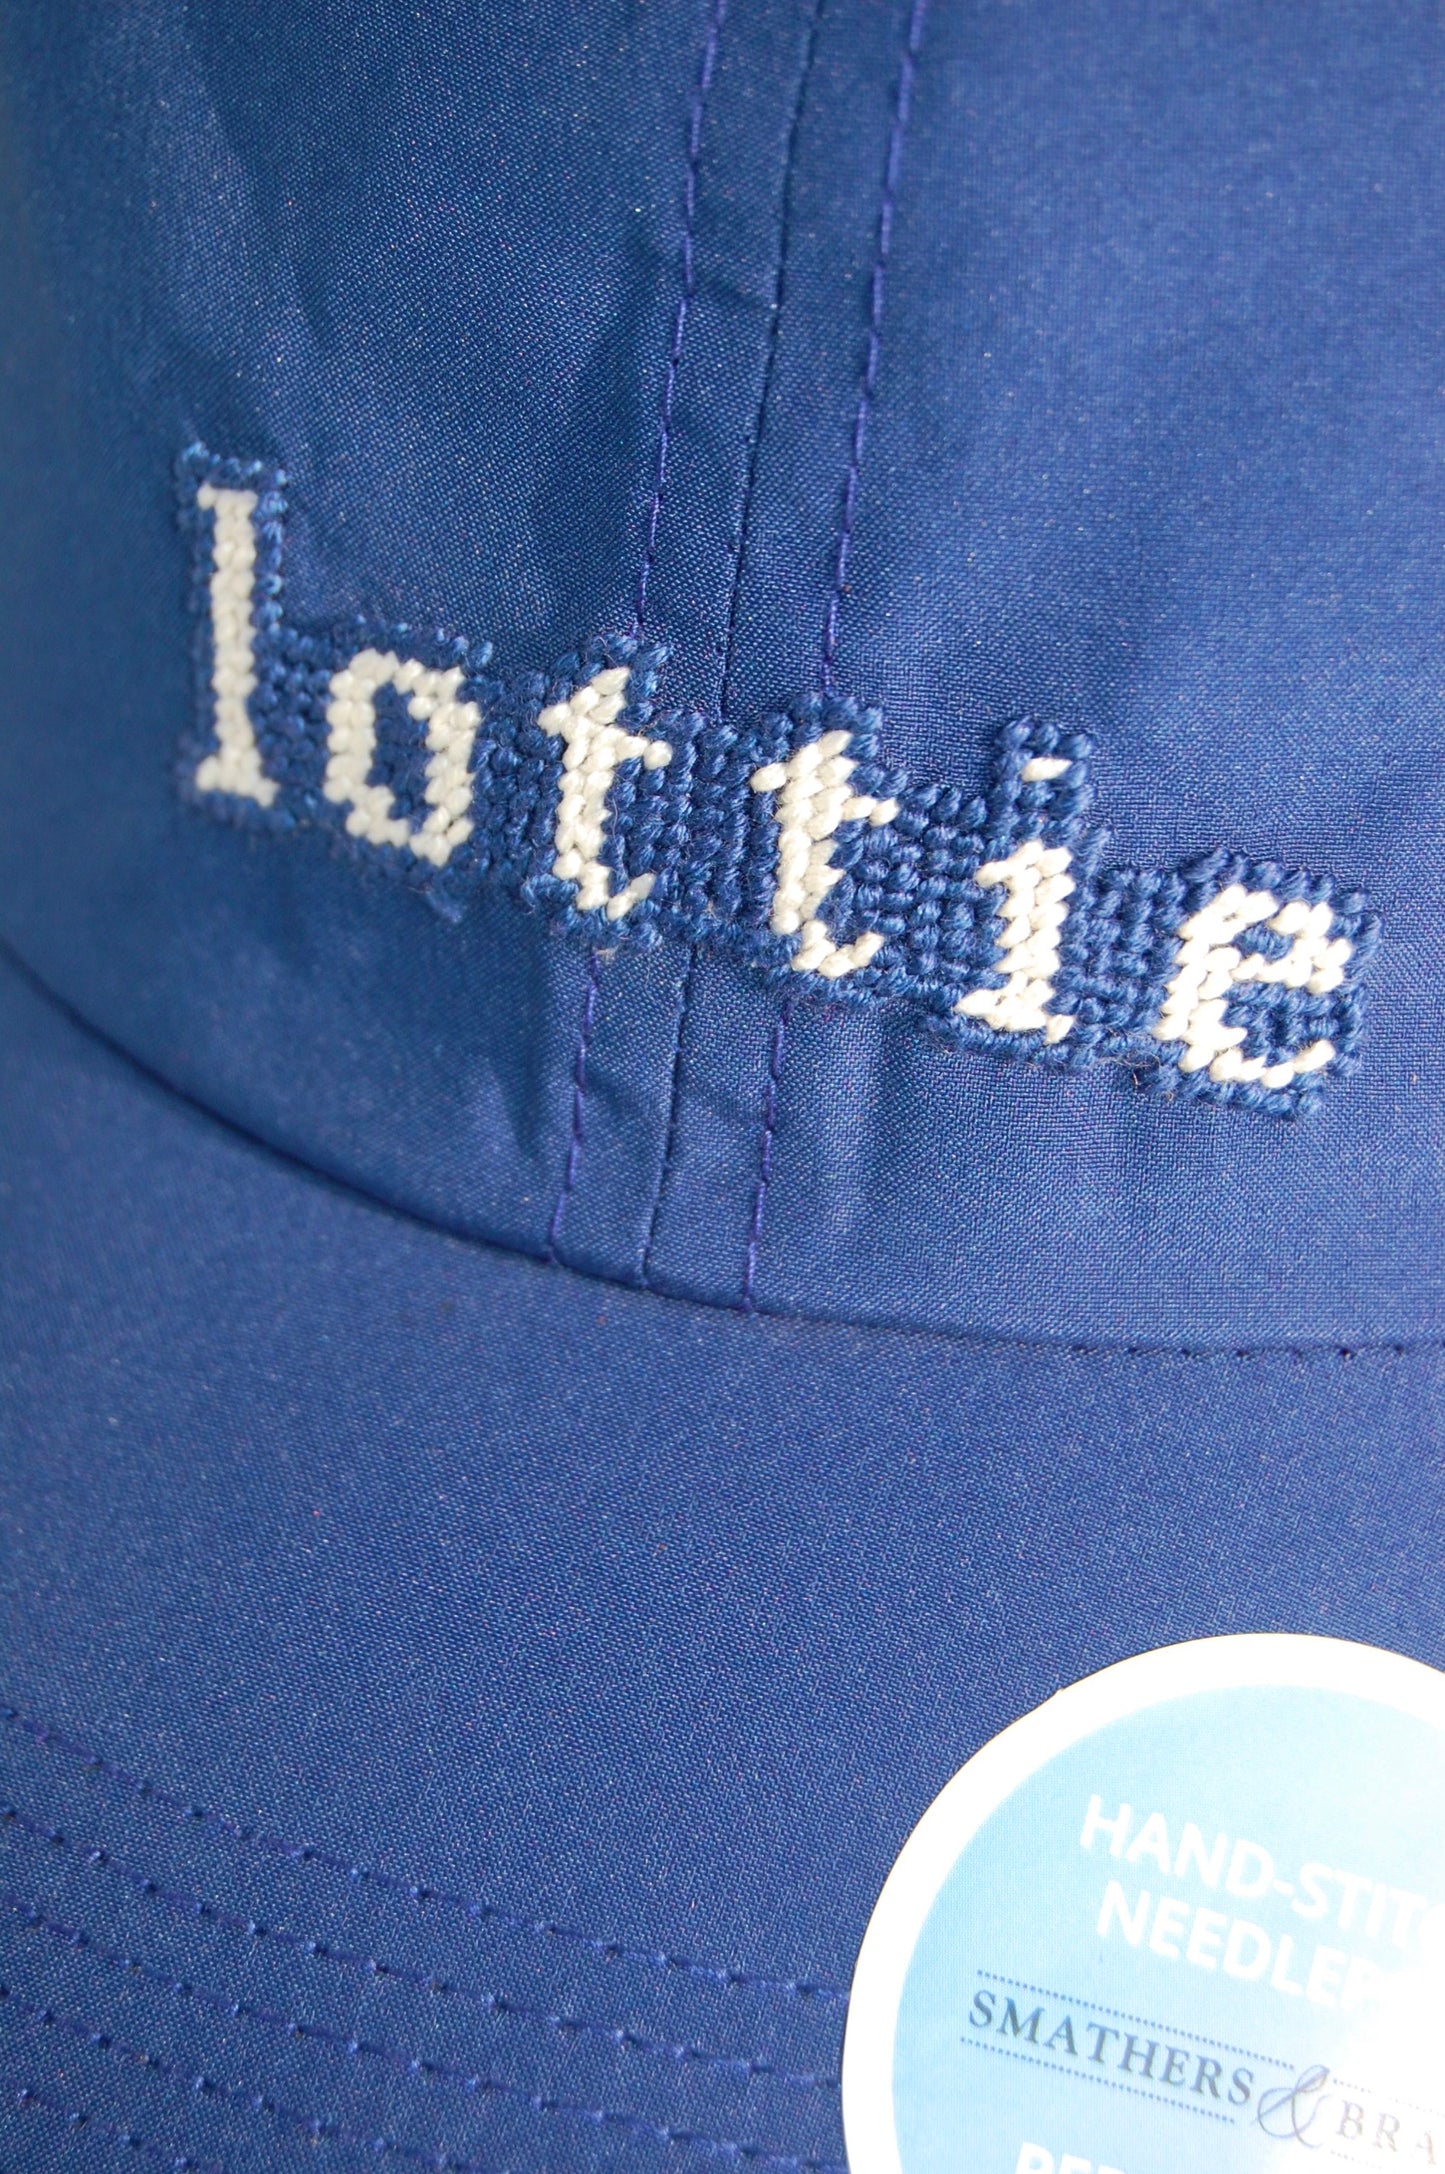 lottie x smathers & branson needlepoint hat